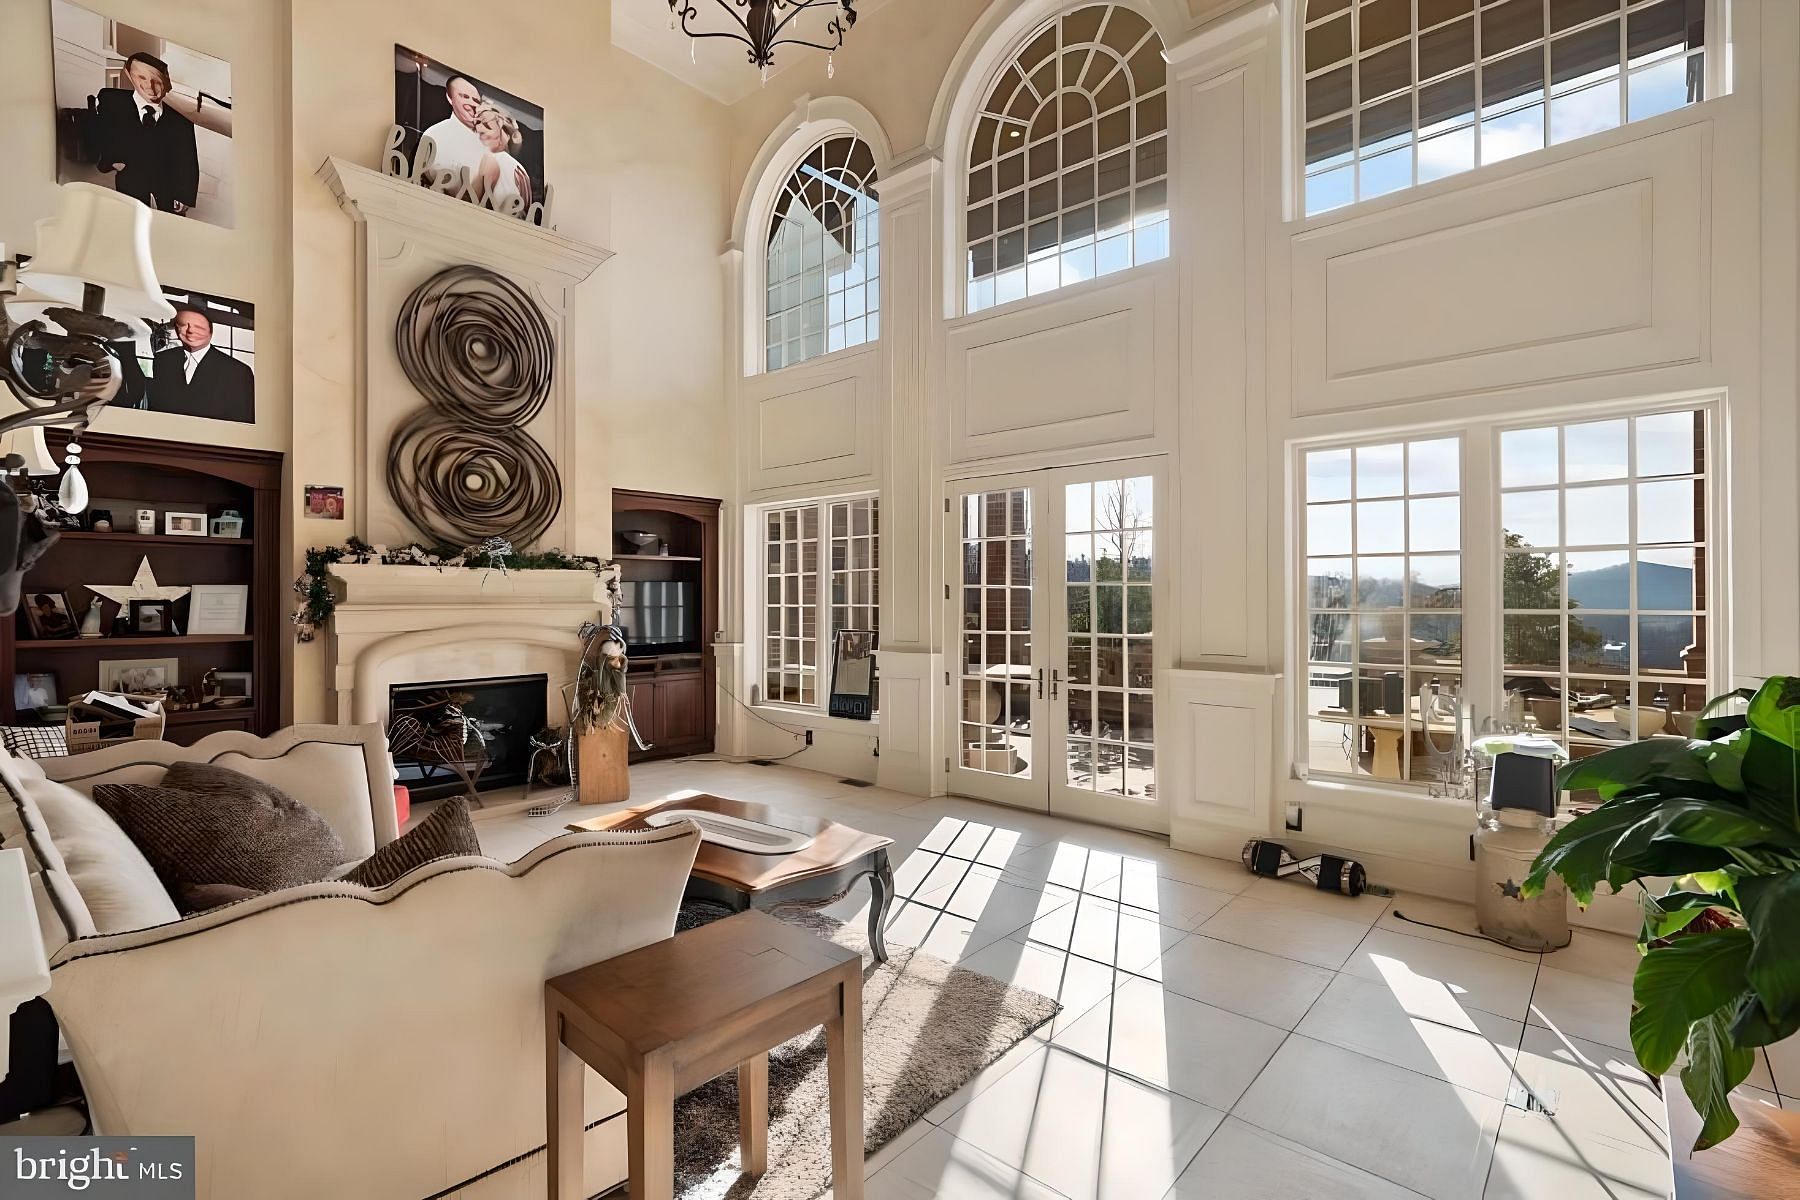 Galusky selling $3,000,000 Bridgeport mansion (image credit: Railey Realty)